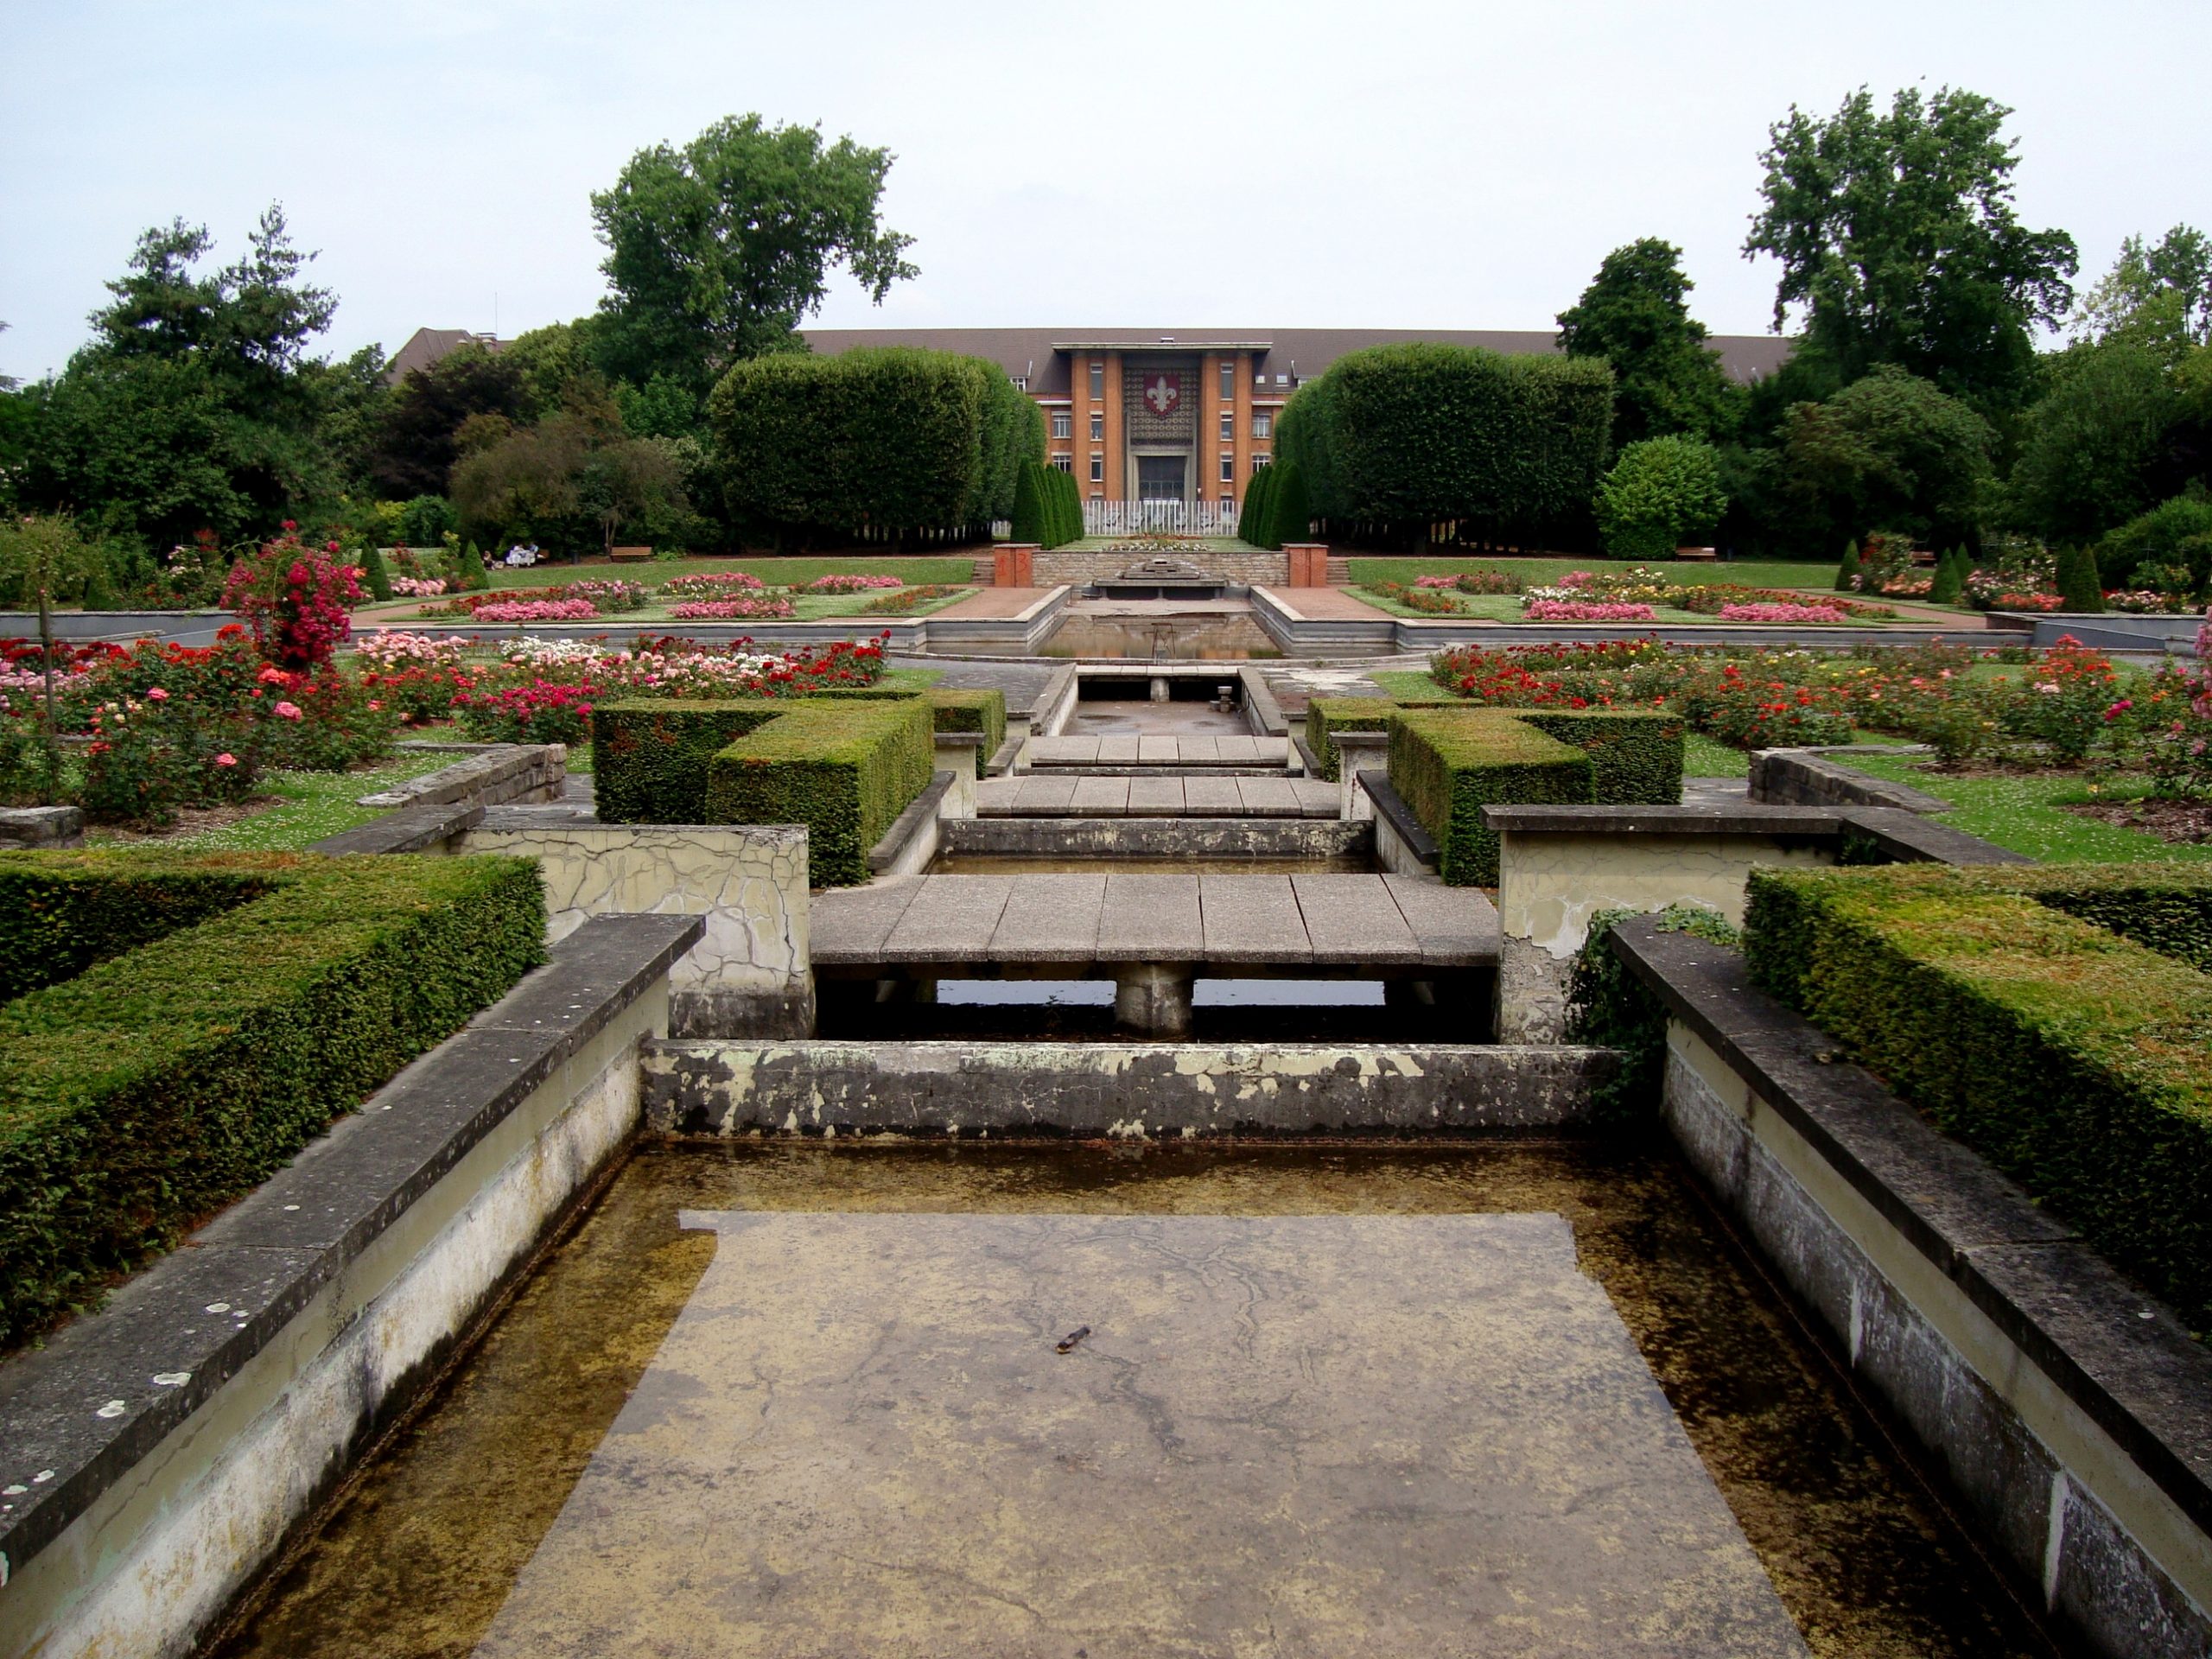 File:lille Jardin Plantes Bassin.jpg - Wikimedia Commons concernant Plante Bassin De Jardin